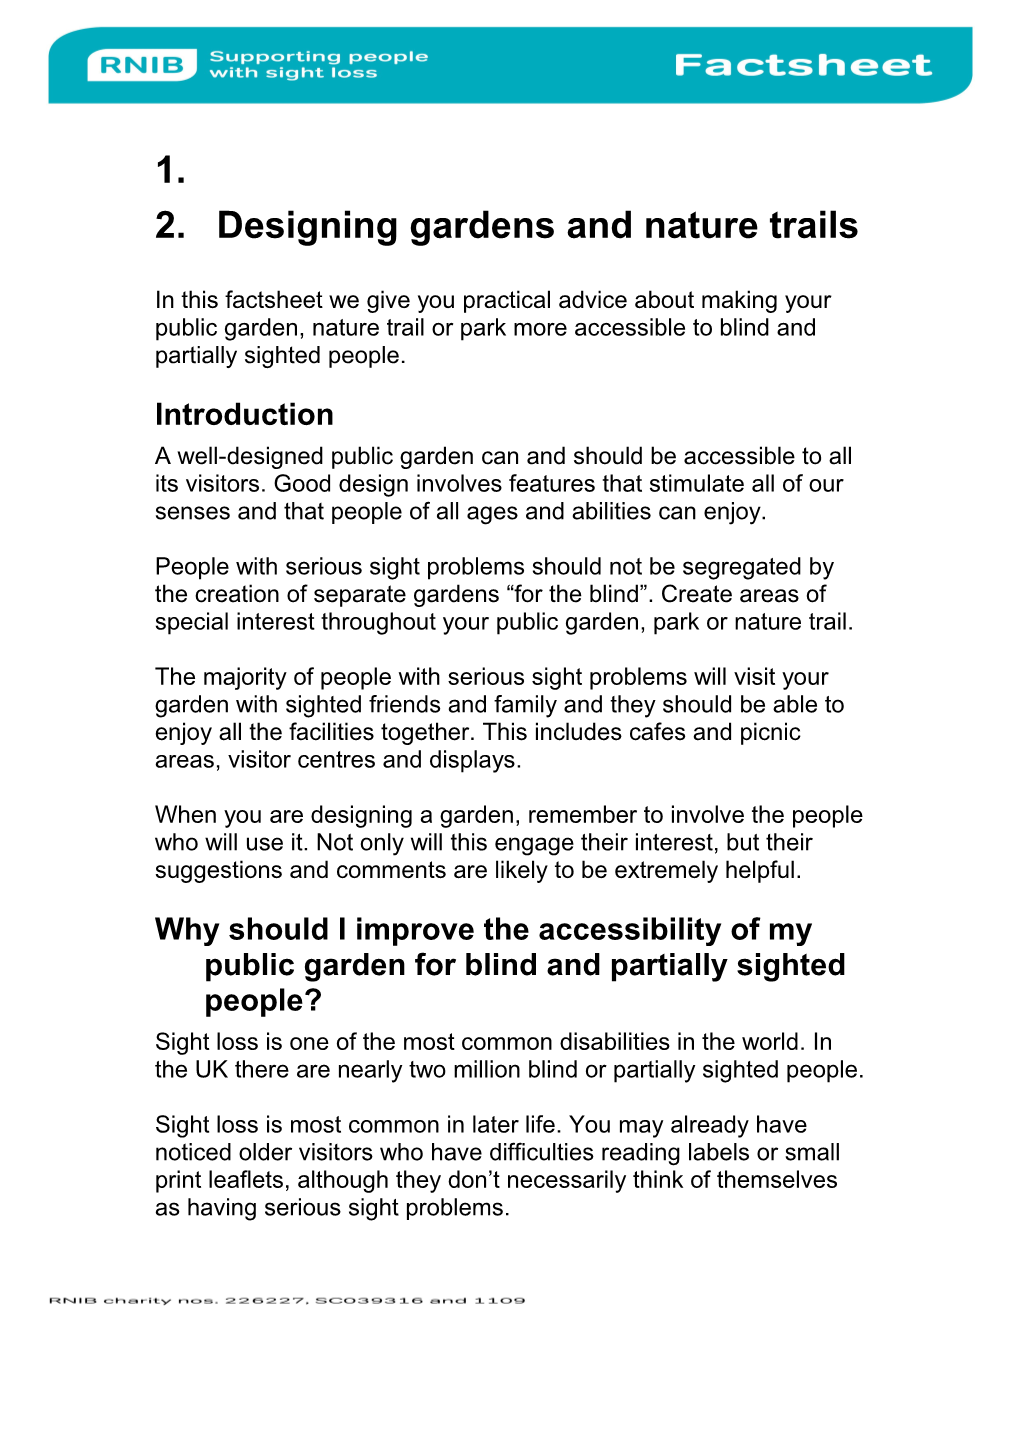 Designing Gardens and Nature Trails Factsheet